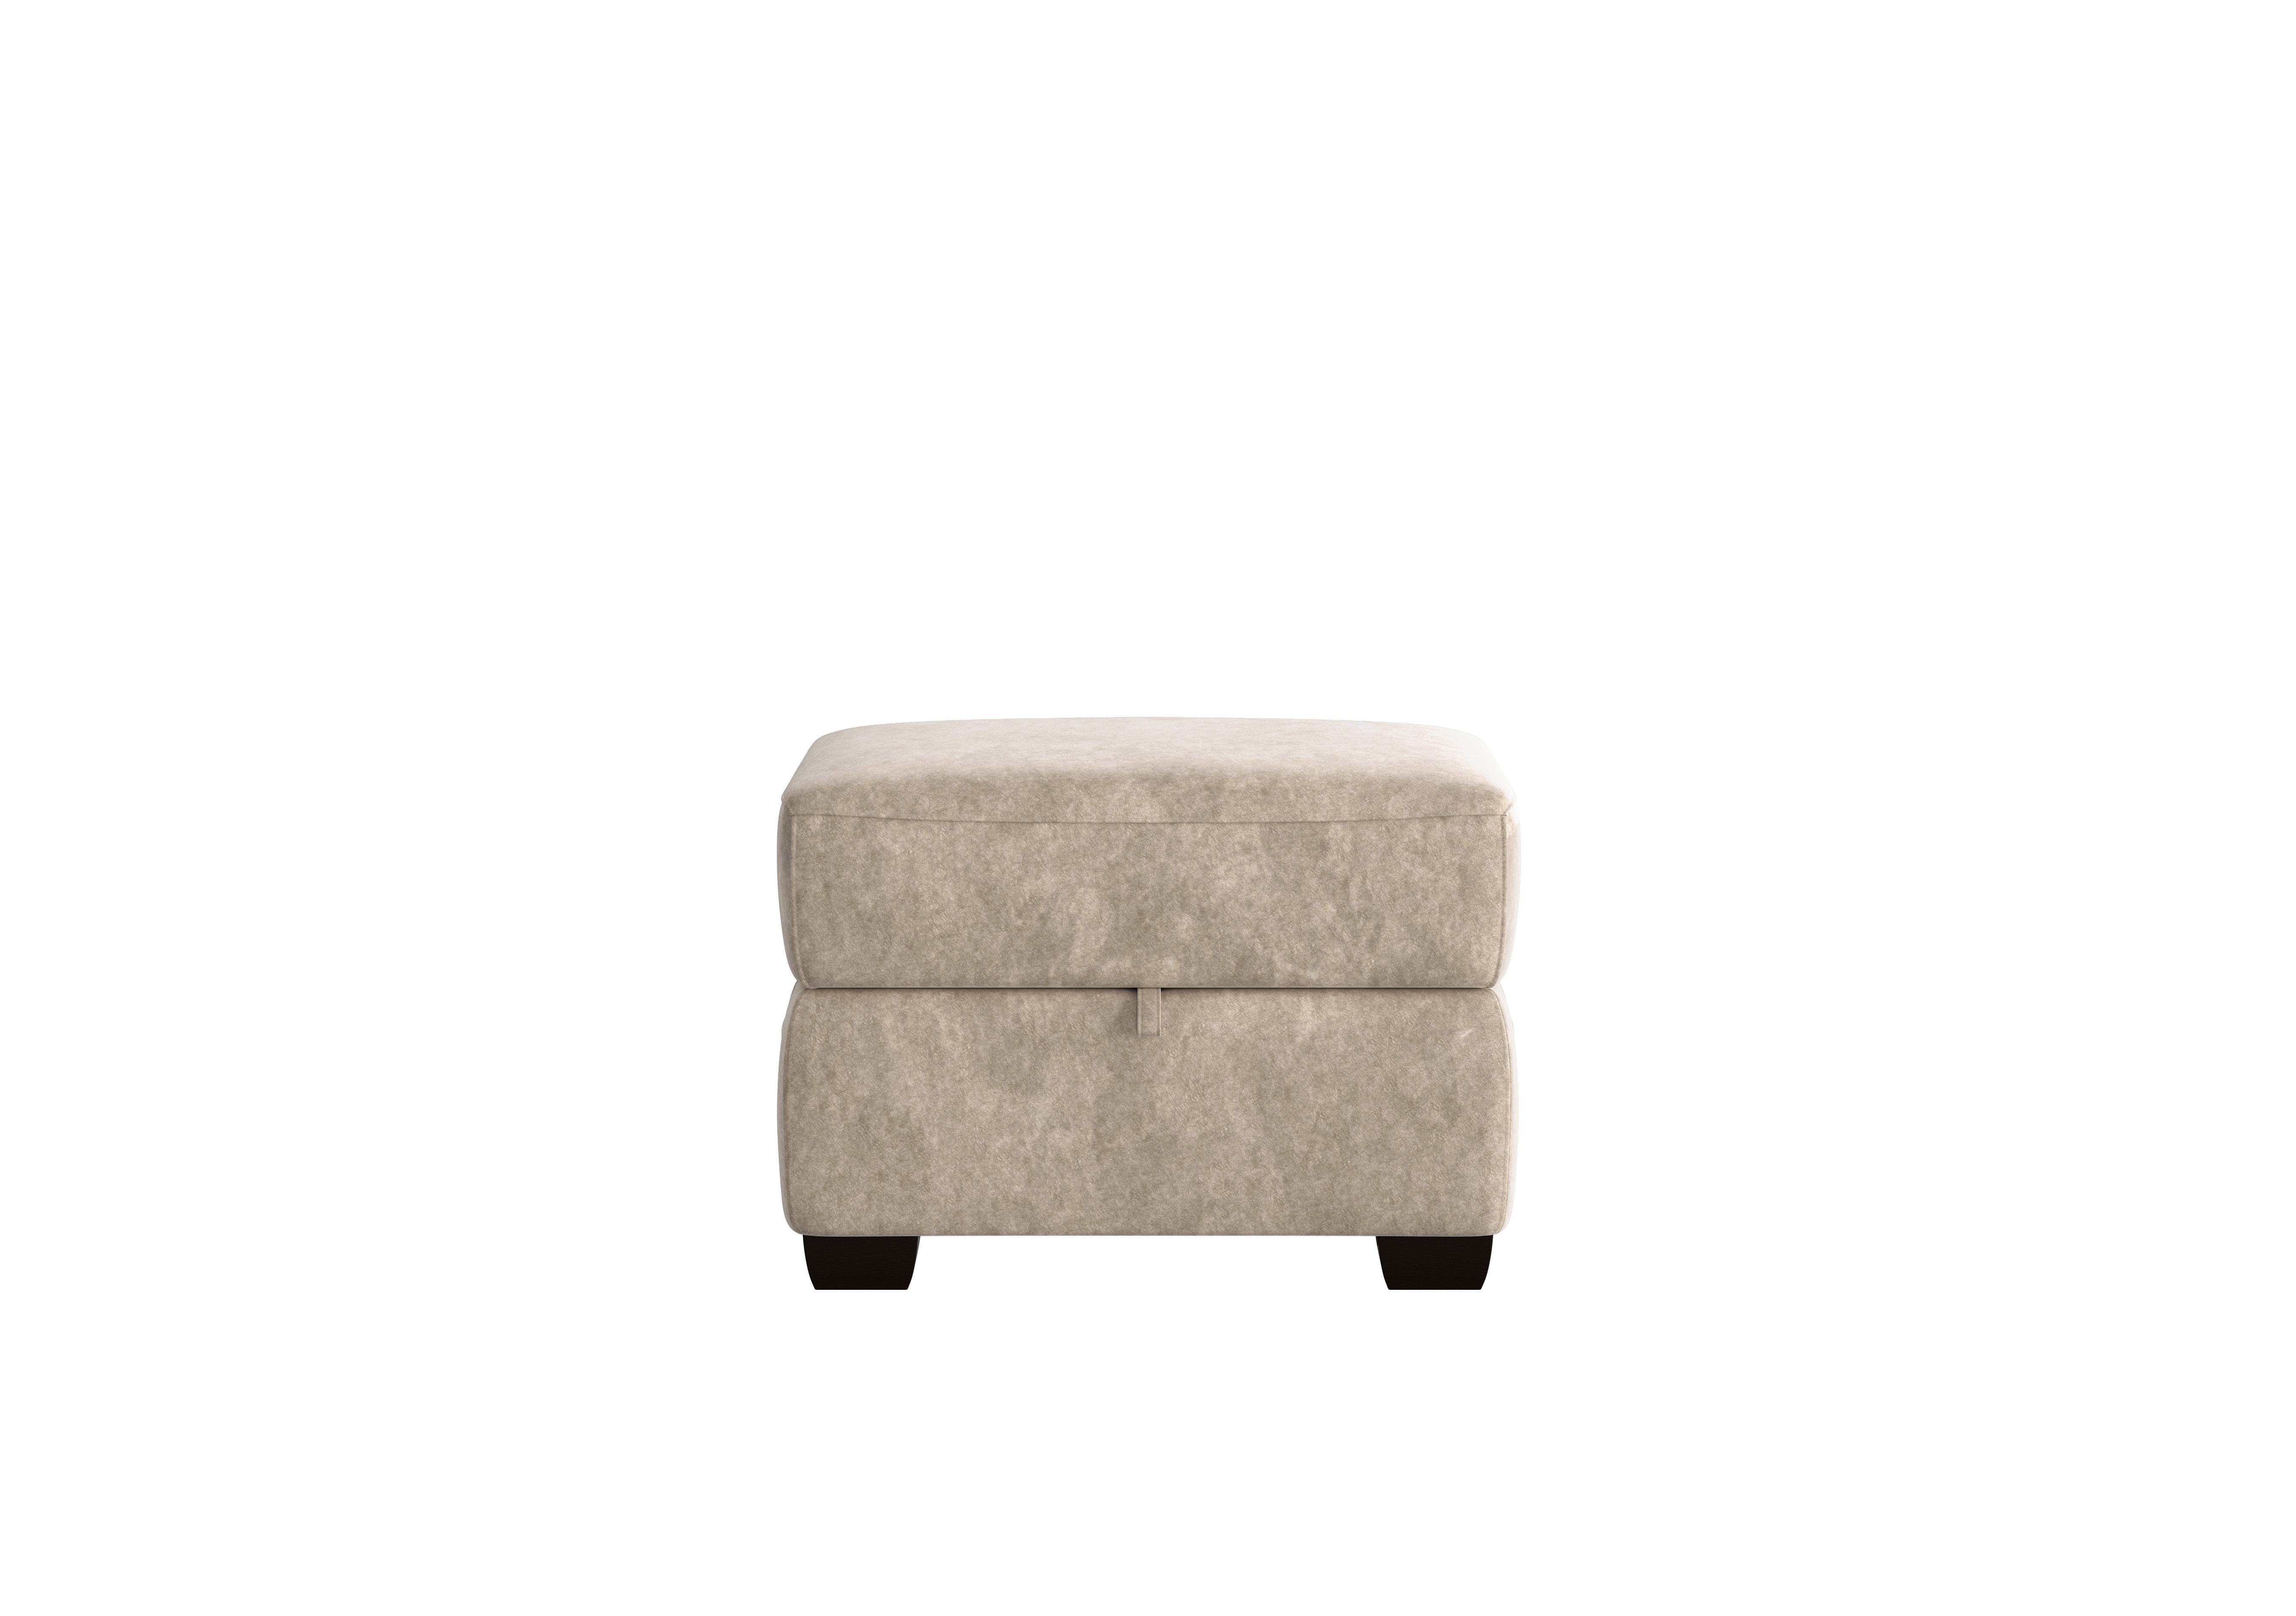 Cozee Fabric Storage Footstool in Bfa-Bnn-R26 Fv2 Cream on Furniture Village